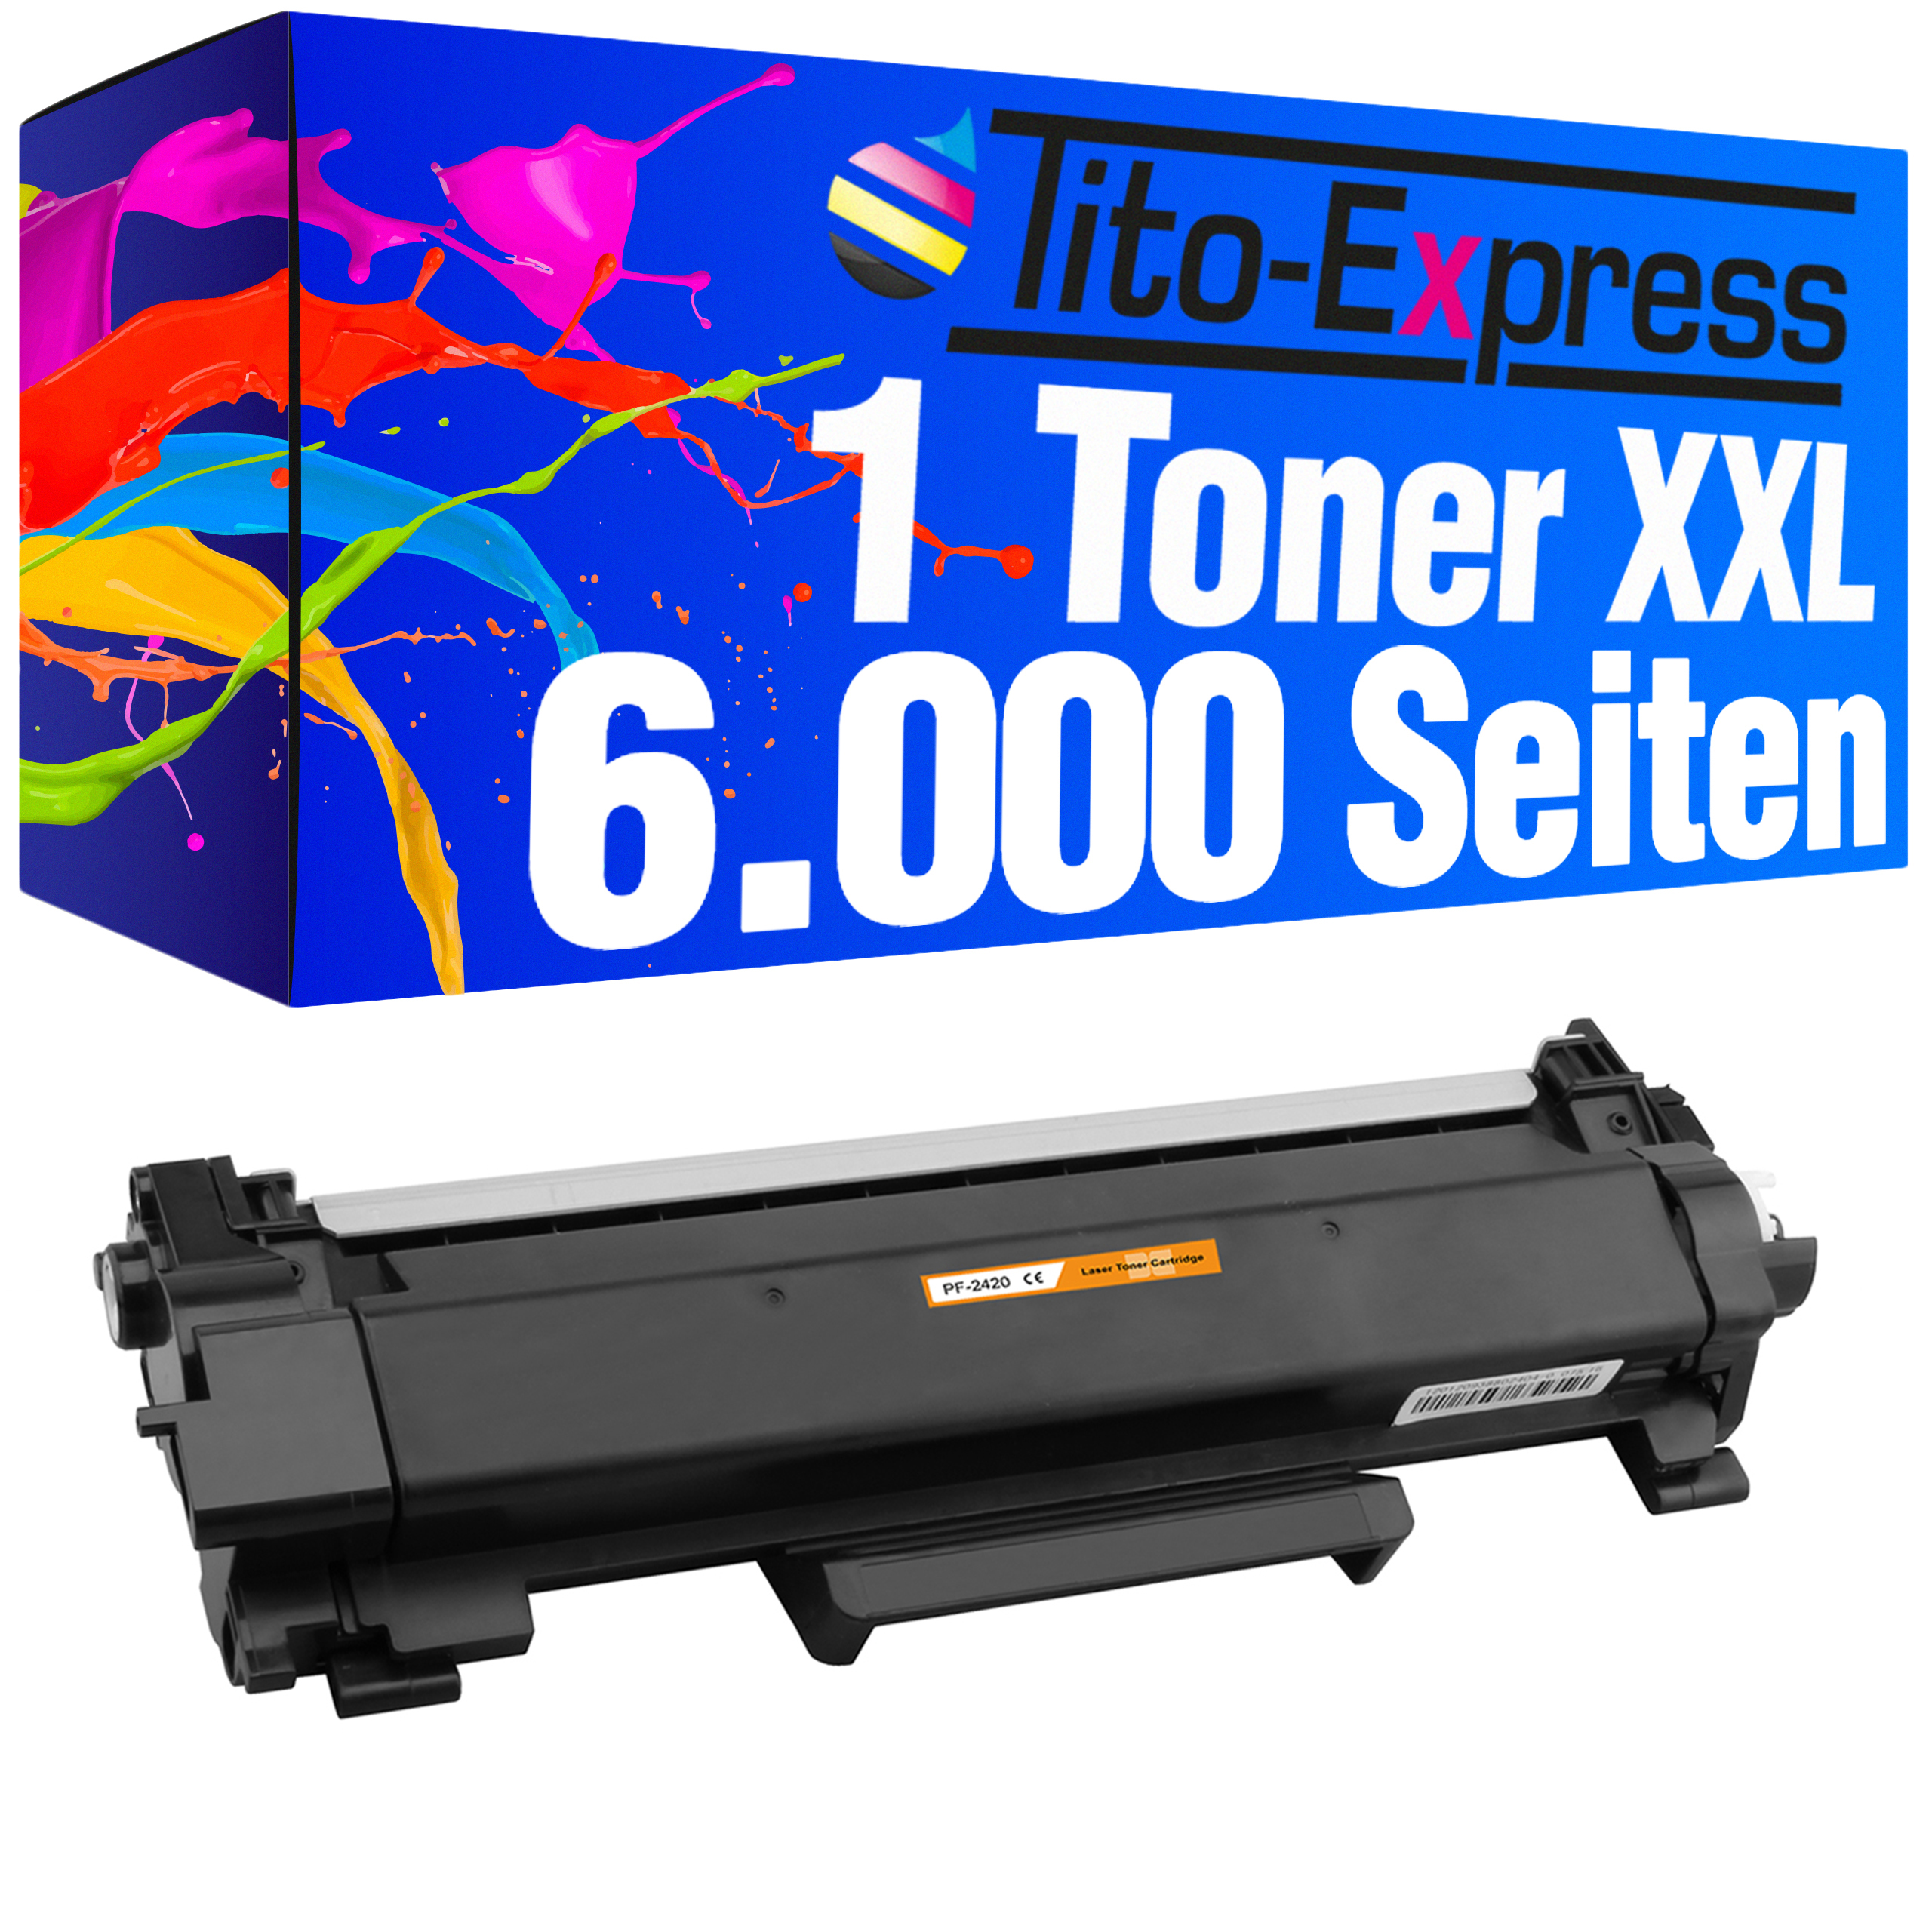 Brother TN-2420 PLATINUMSERIE ersetzt (TN-2420) 1 Super-XL TITO-EXPRESS Black Toner Toner